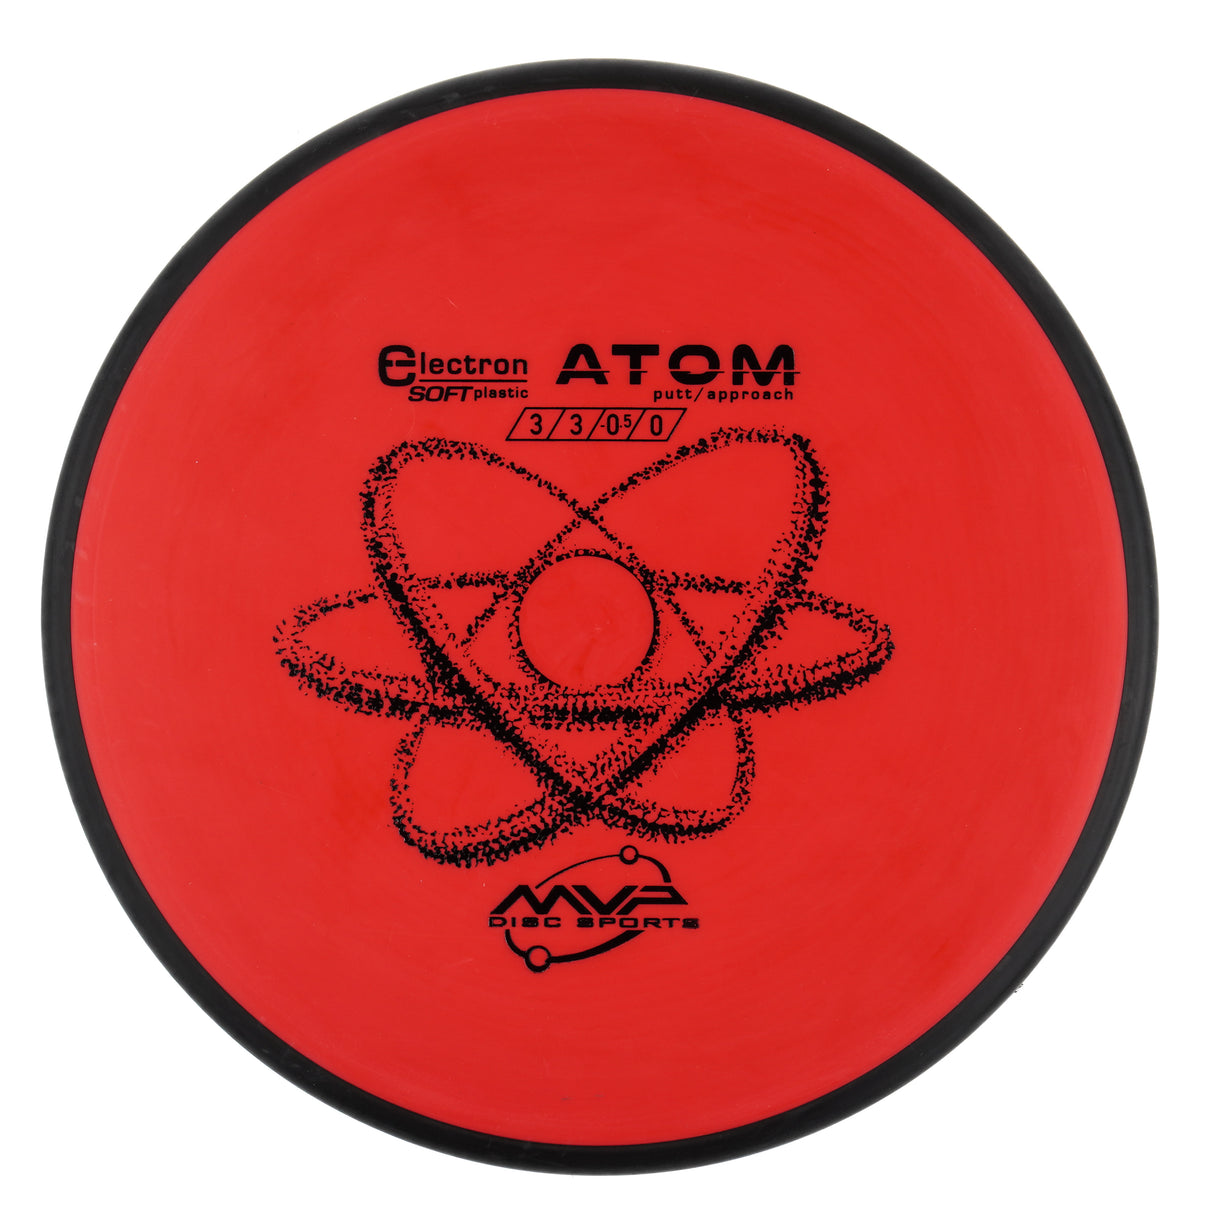 MVP Atom - Electron Soft 175g | Style 0002